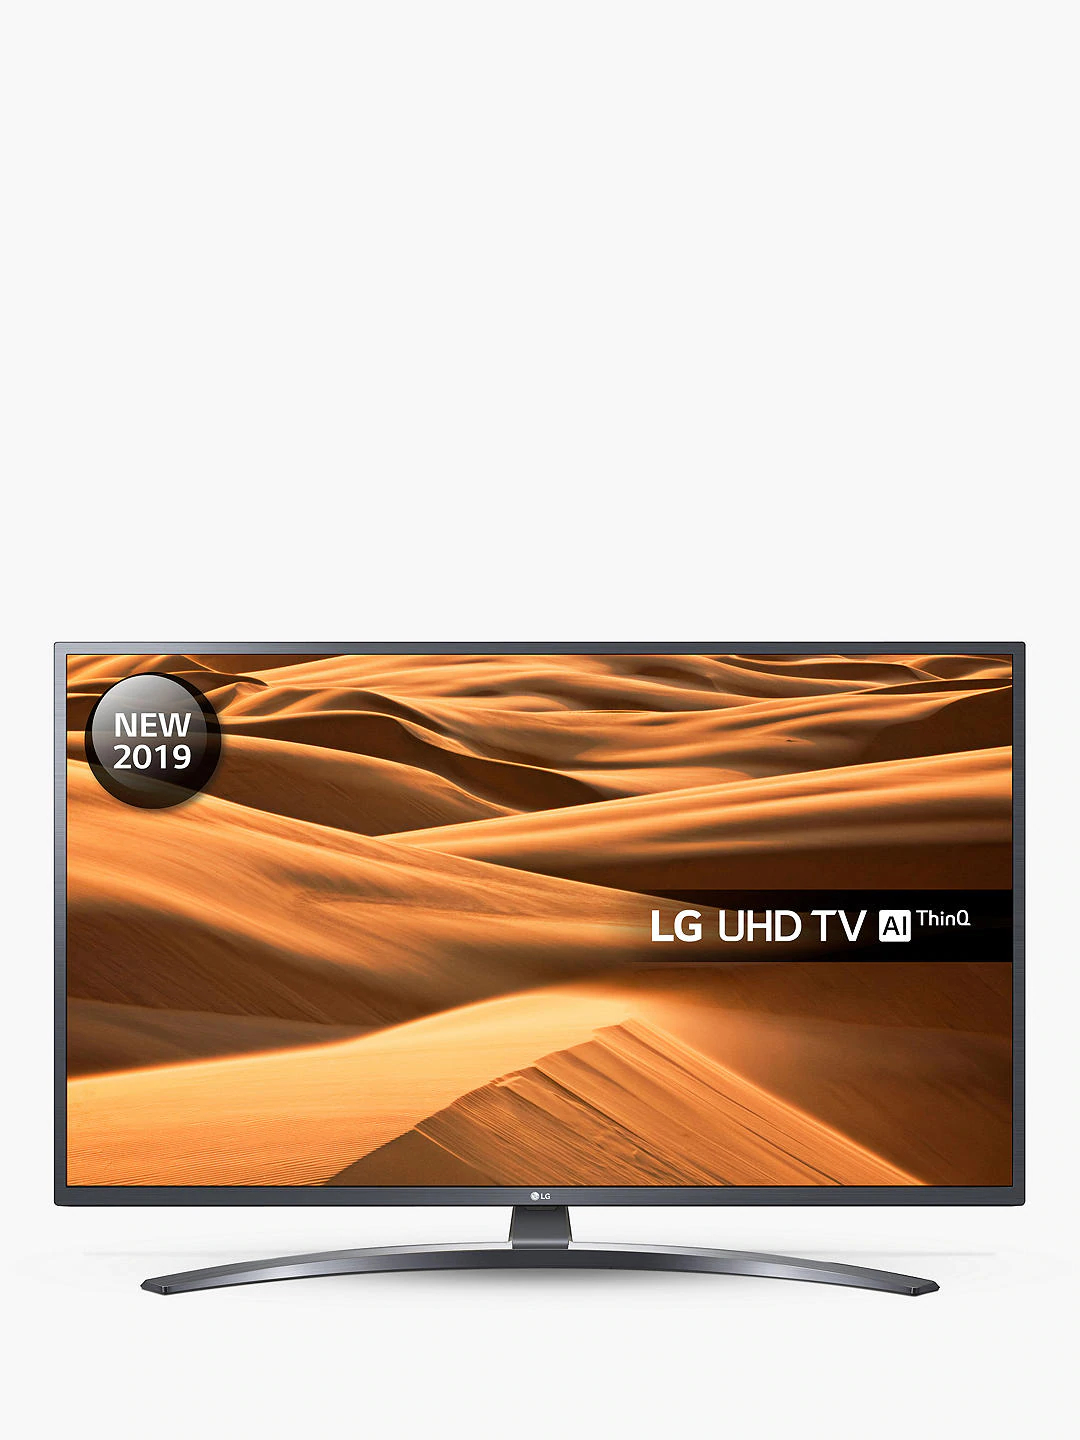 Lg 49um7400plb 2019 Led Hdr 4k Ultra Hd Smart Tv 49 With